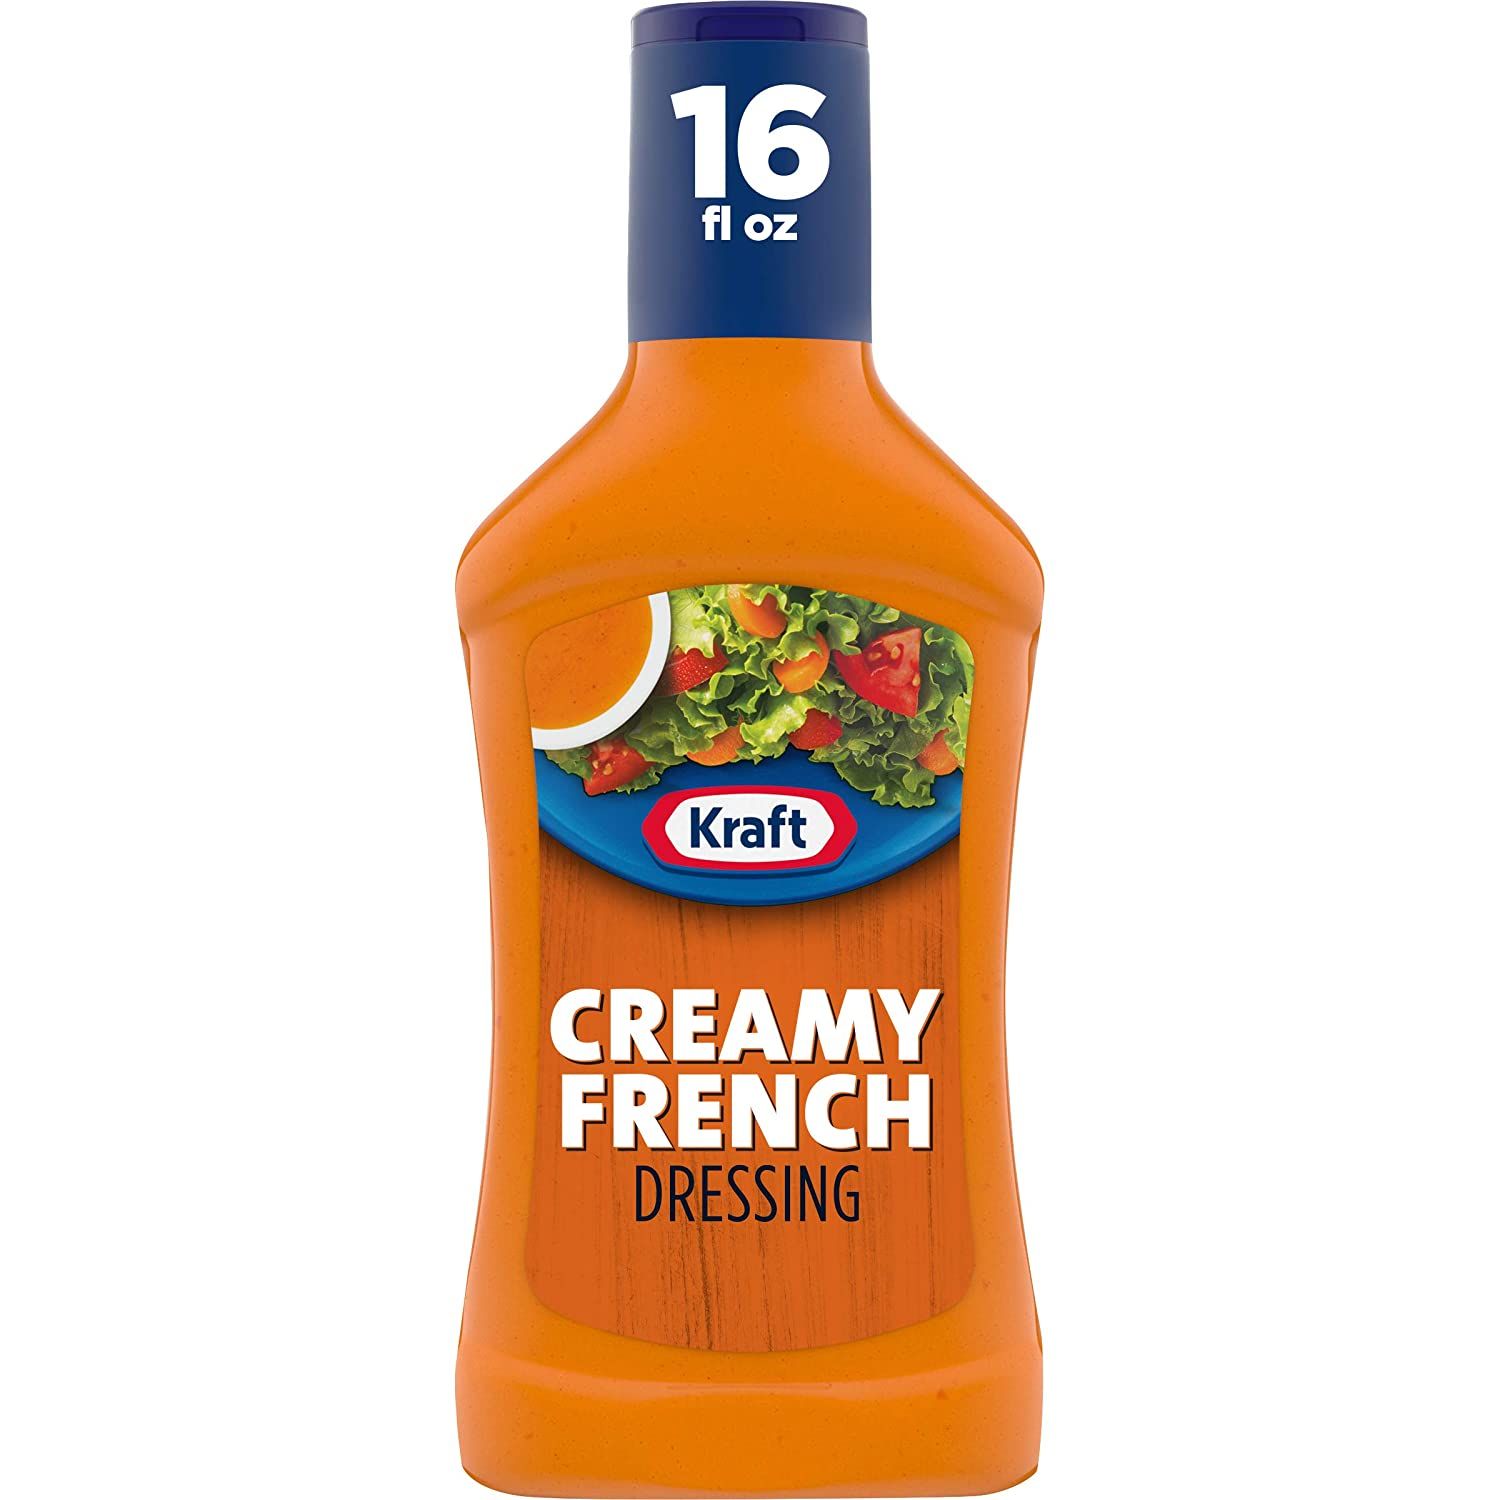 Kraft Creamy French Dressing Image